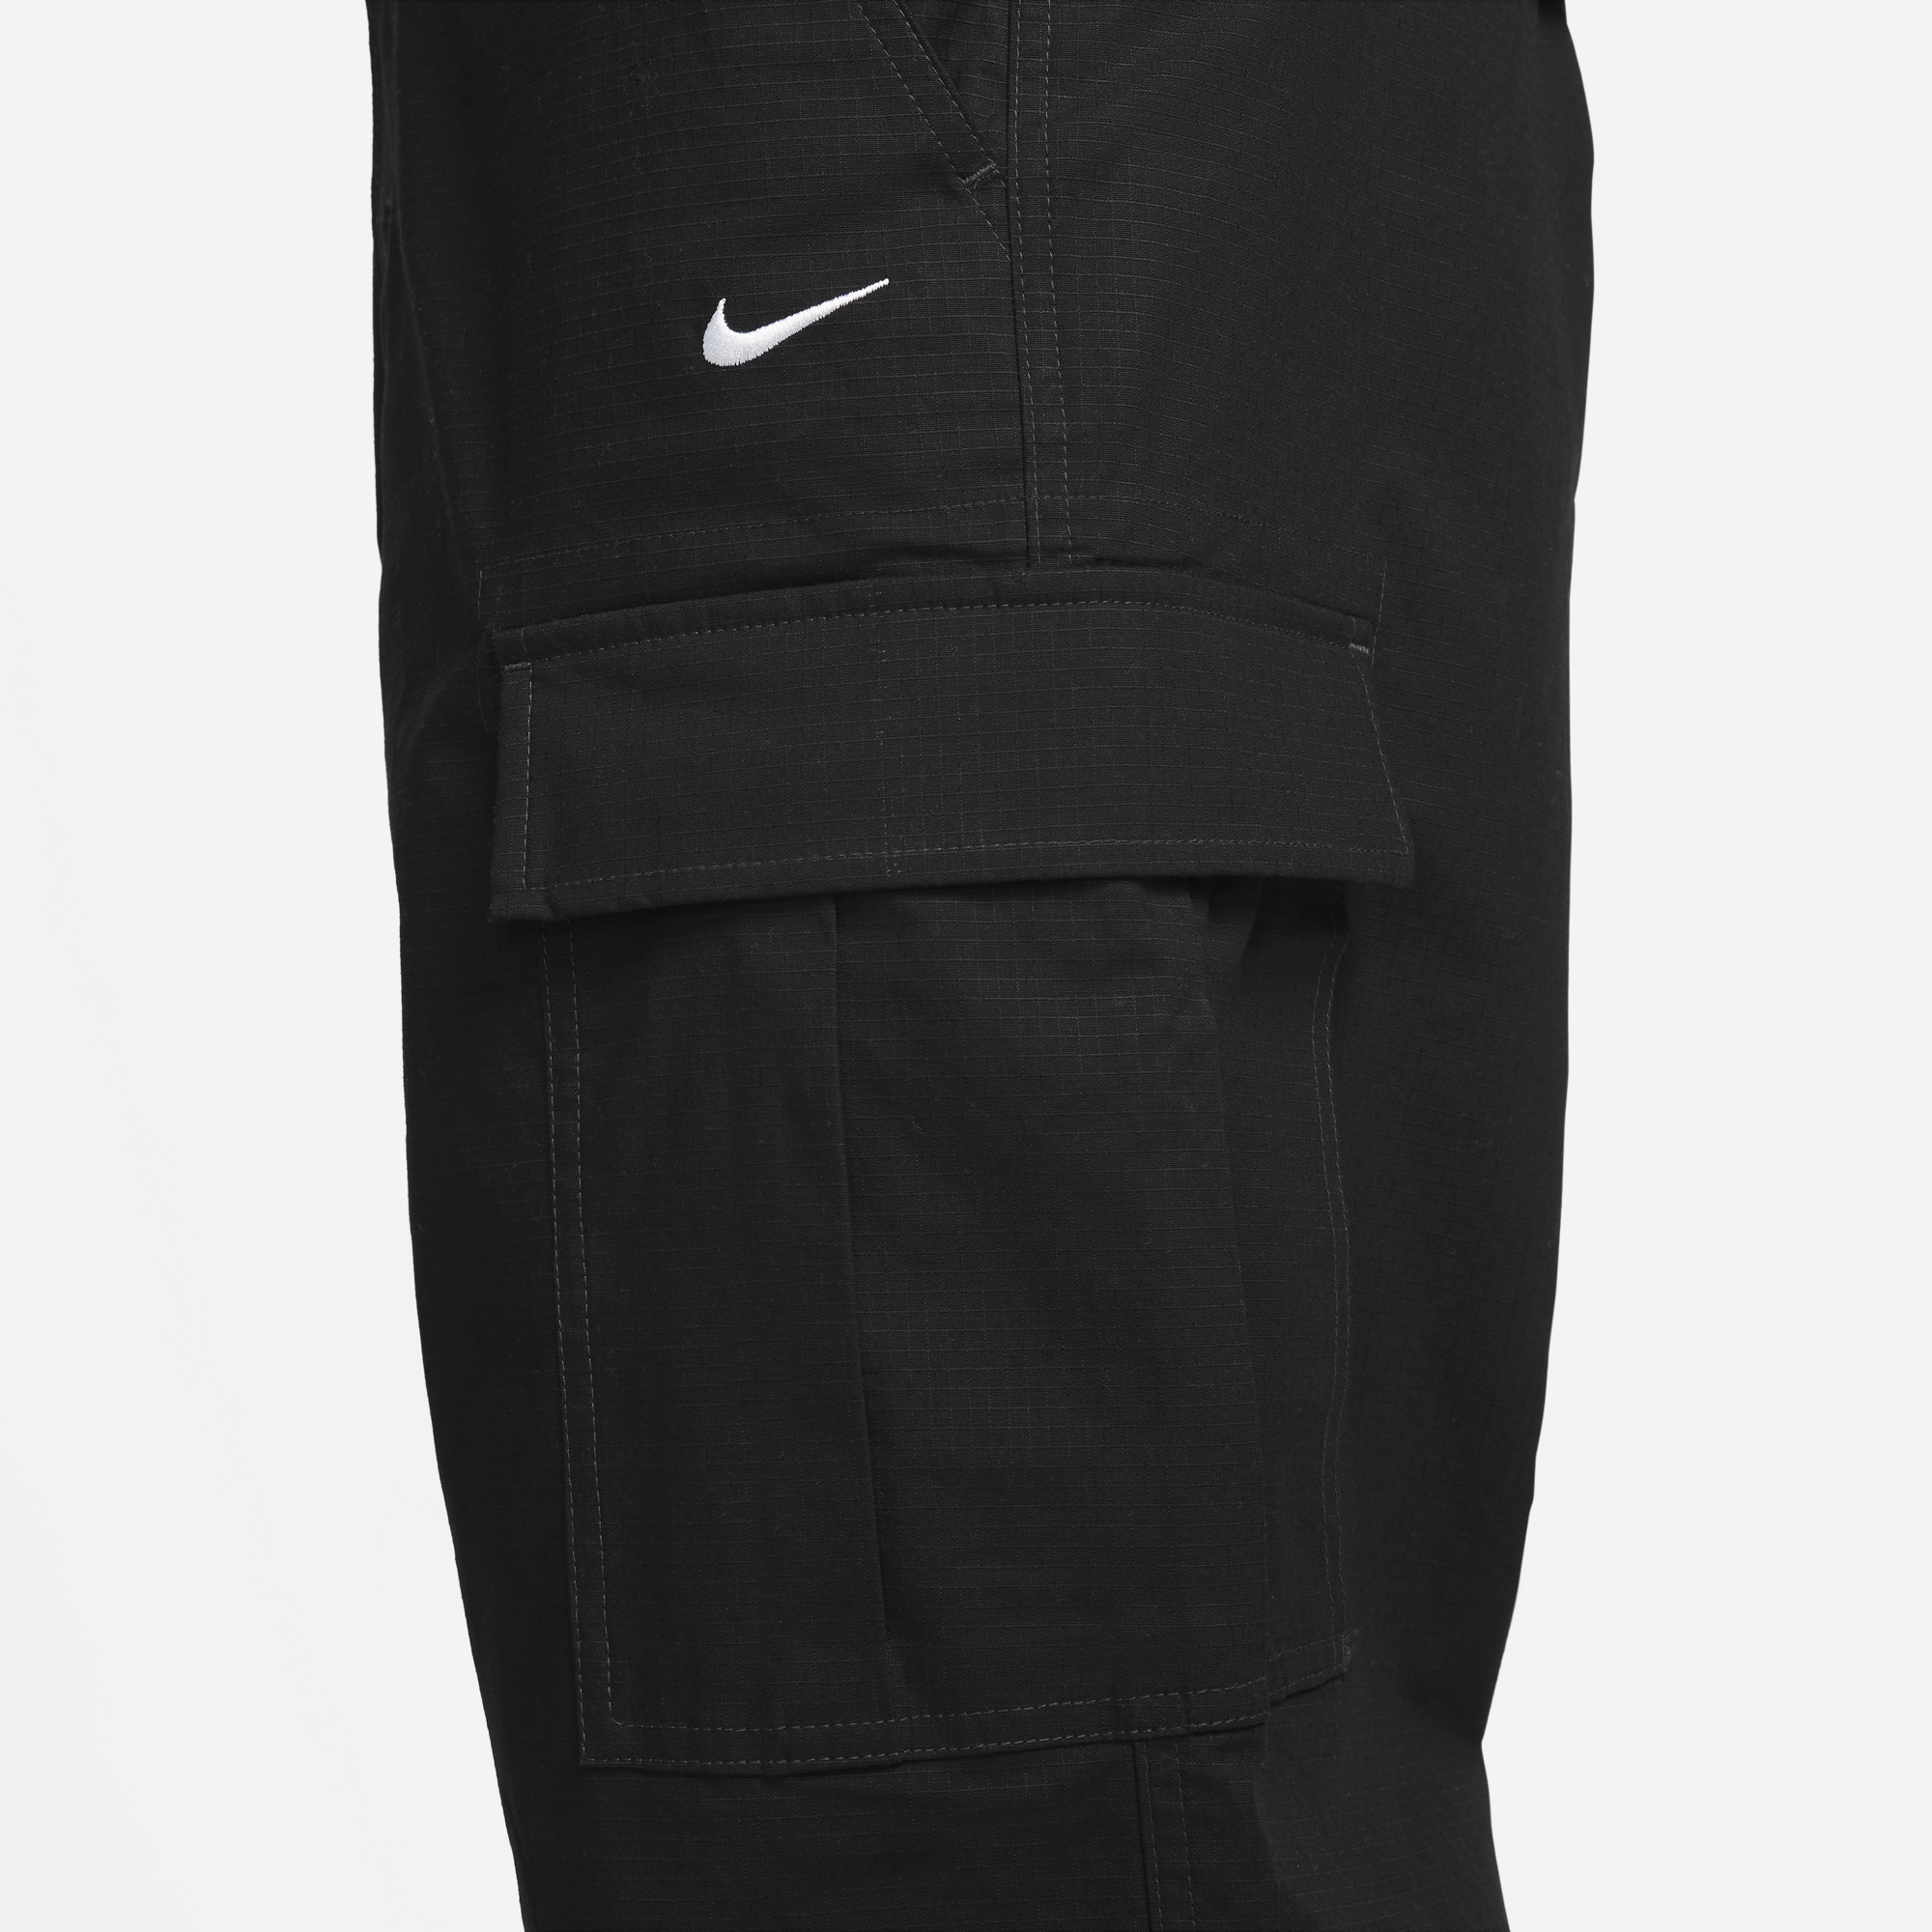 Nike SB Kearny Cargo Pant Black - Orchard Skateshop